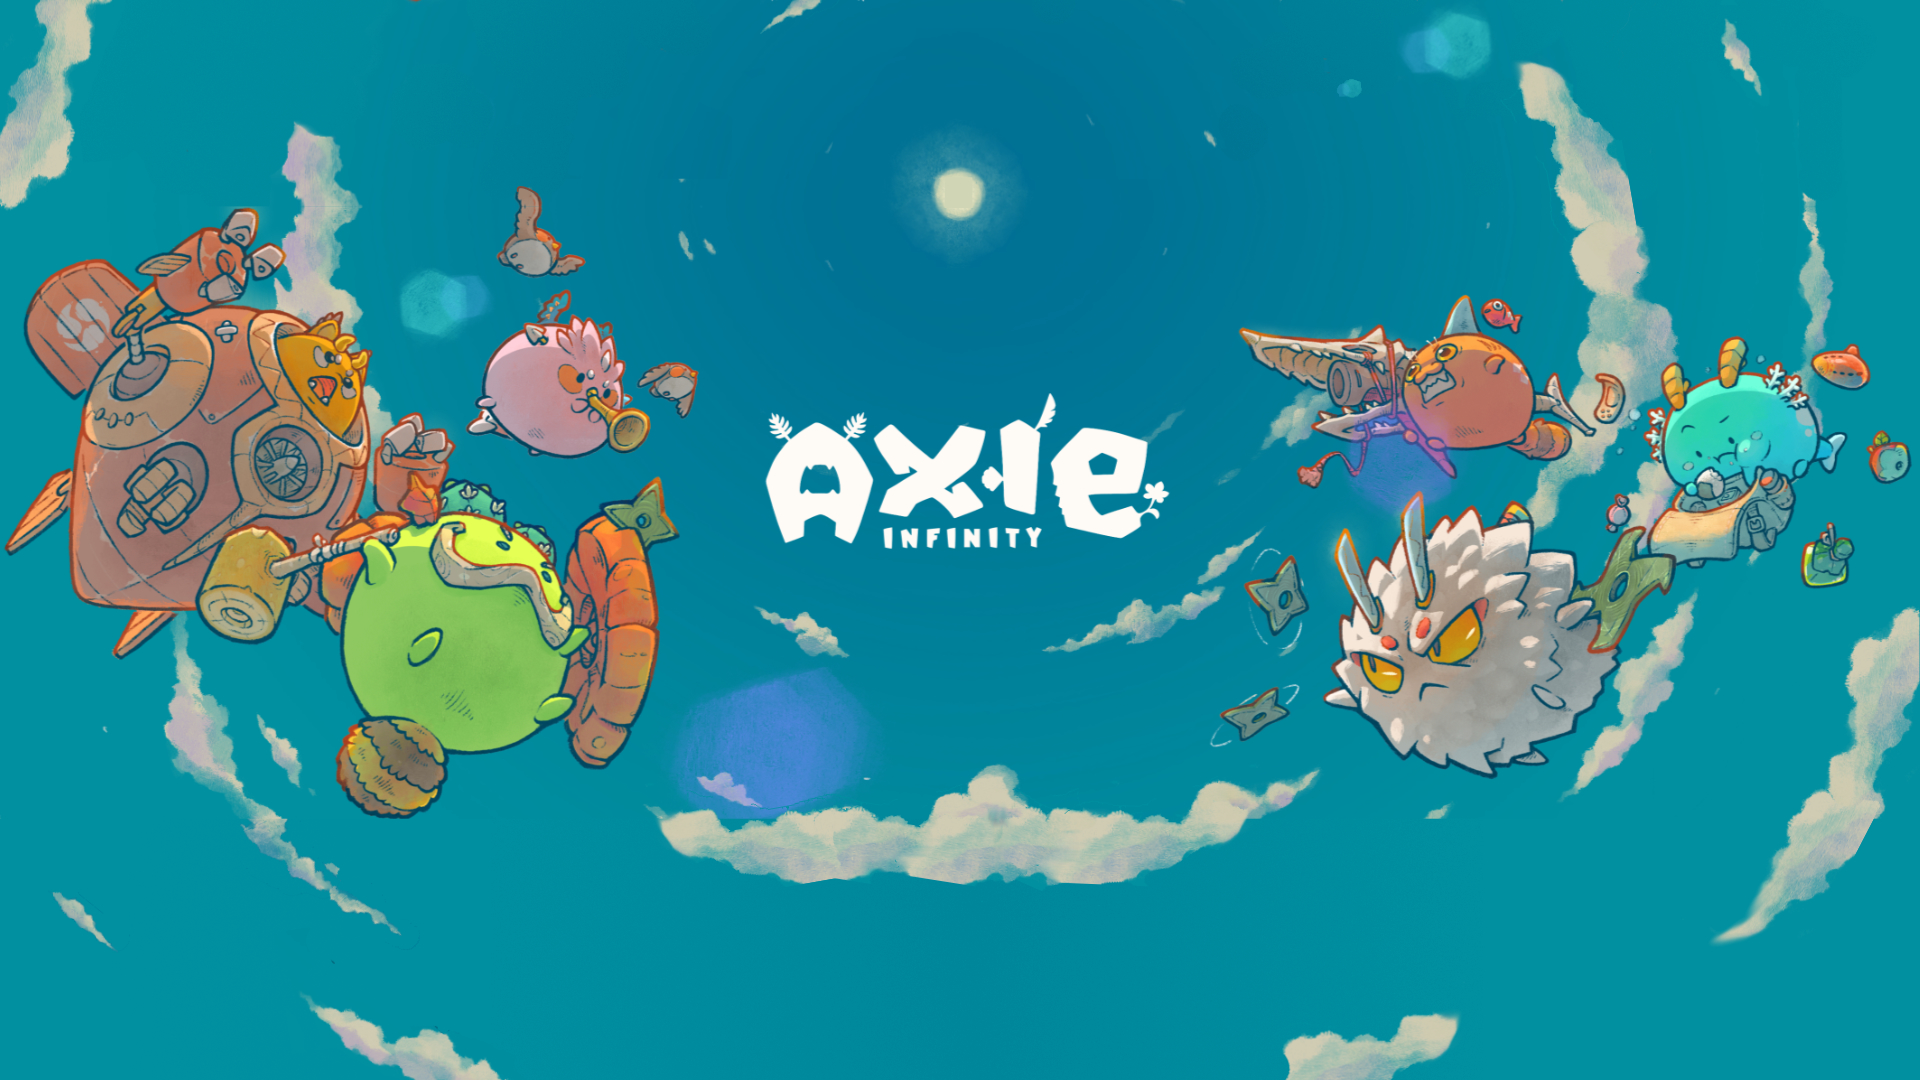 بازی متاورس
بازی متاورسی
متاورس
metaverse
اکسی اینفینیتی
Axie Infinity